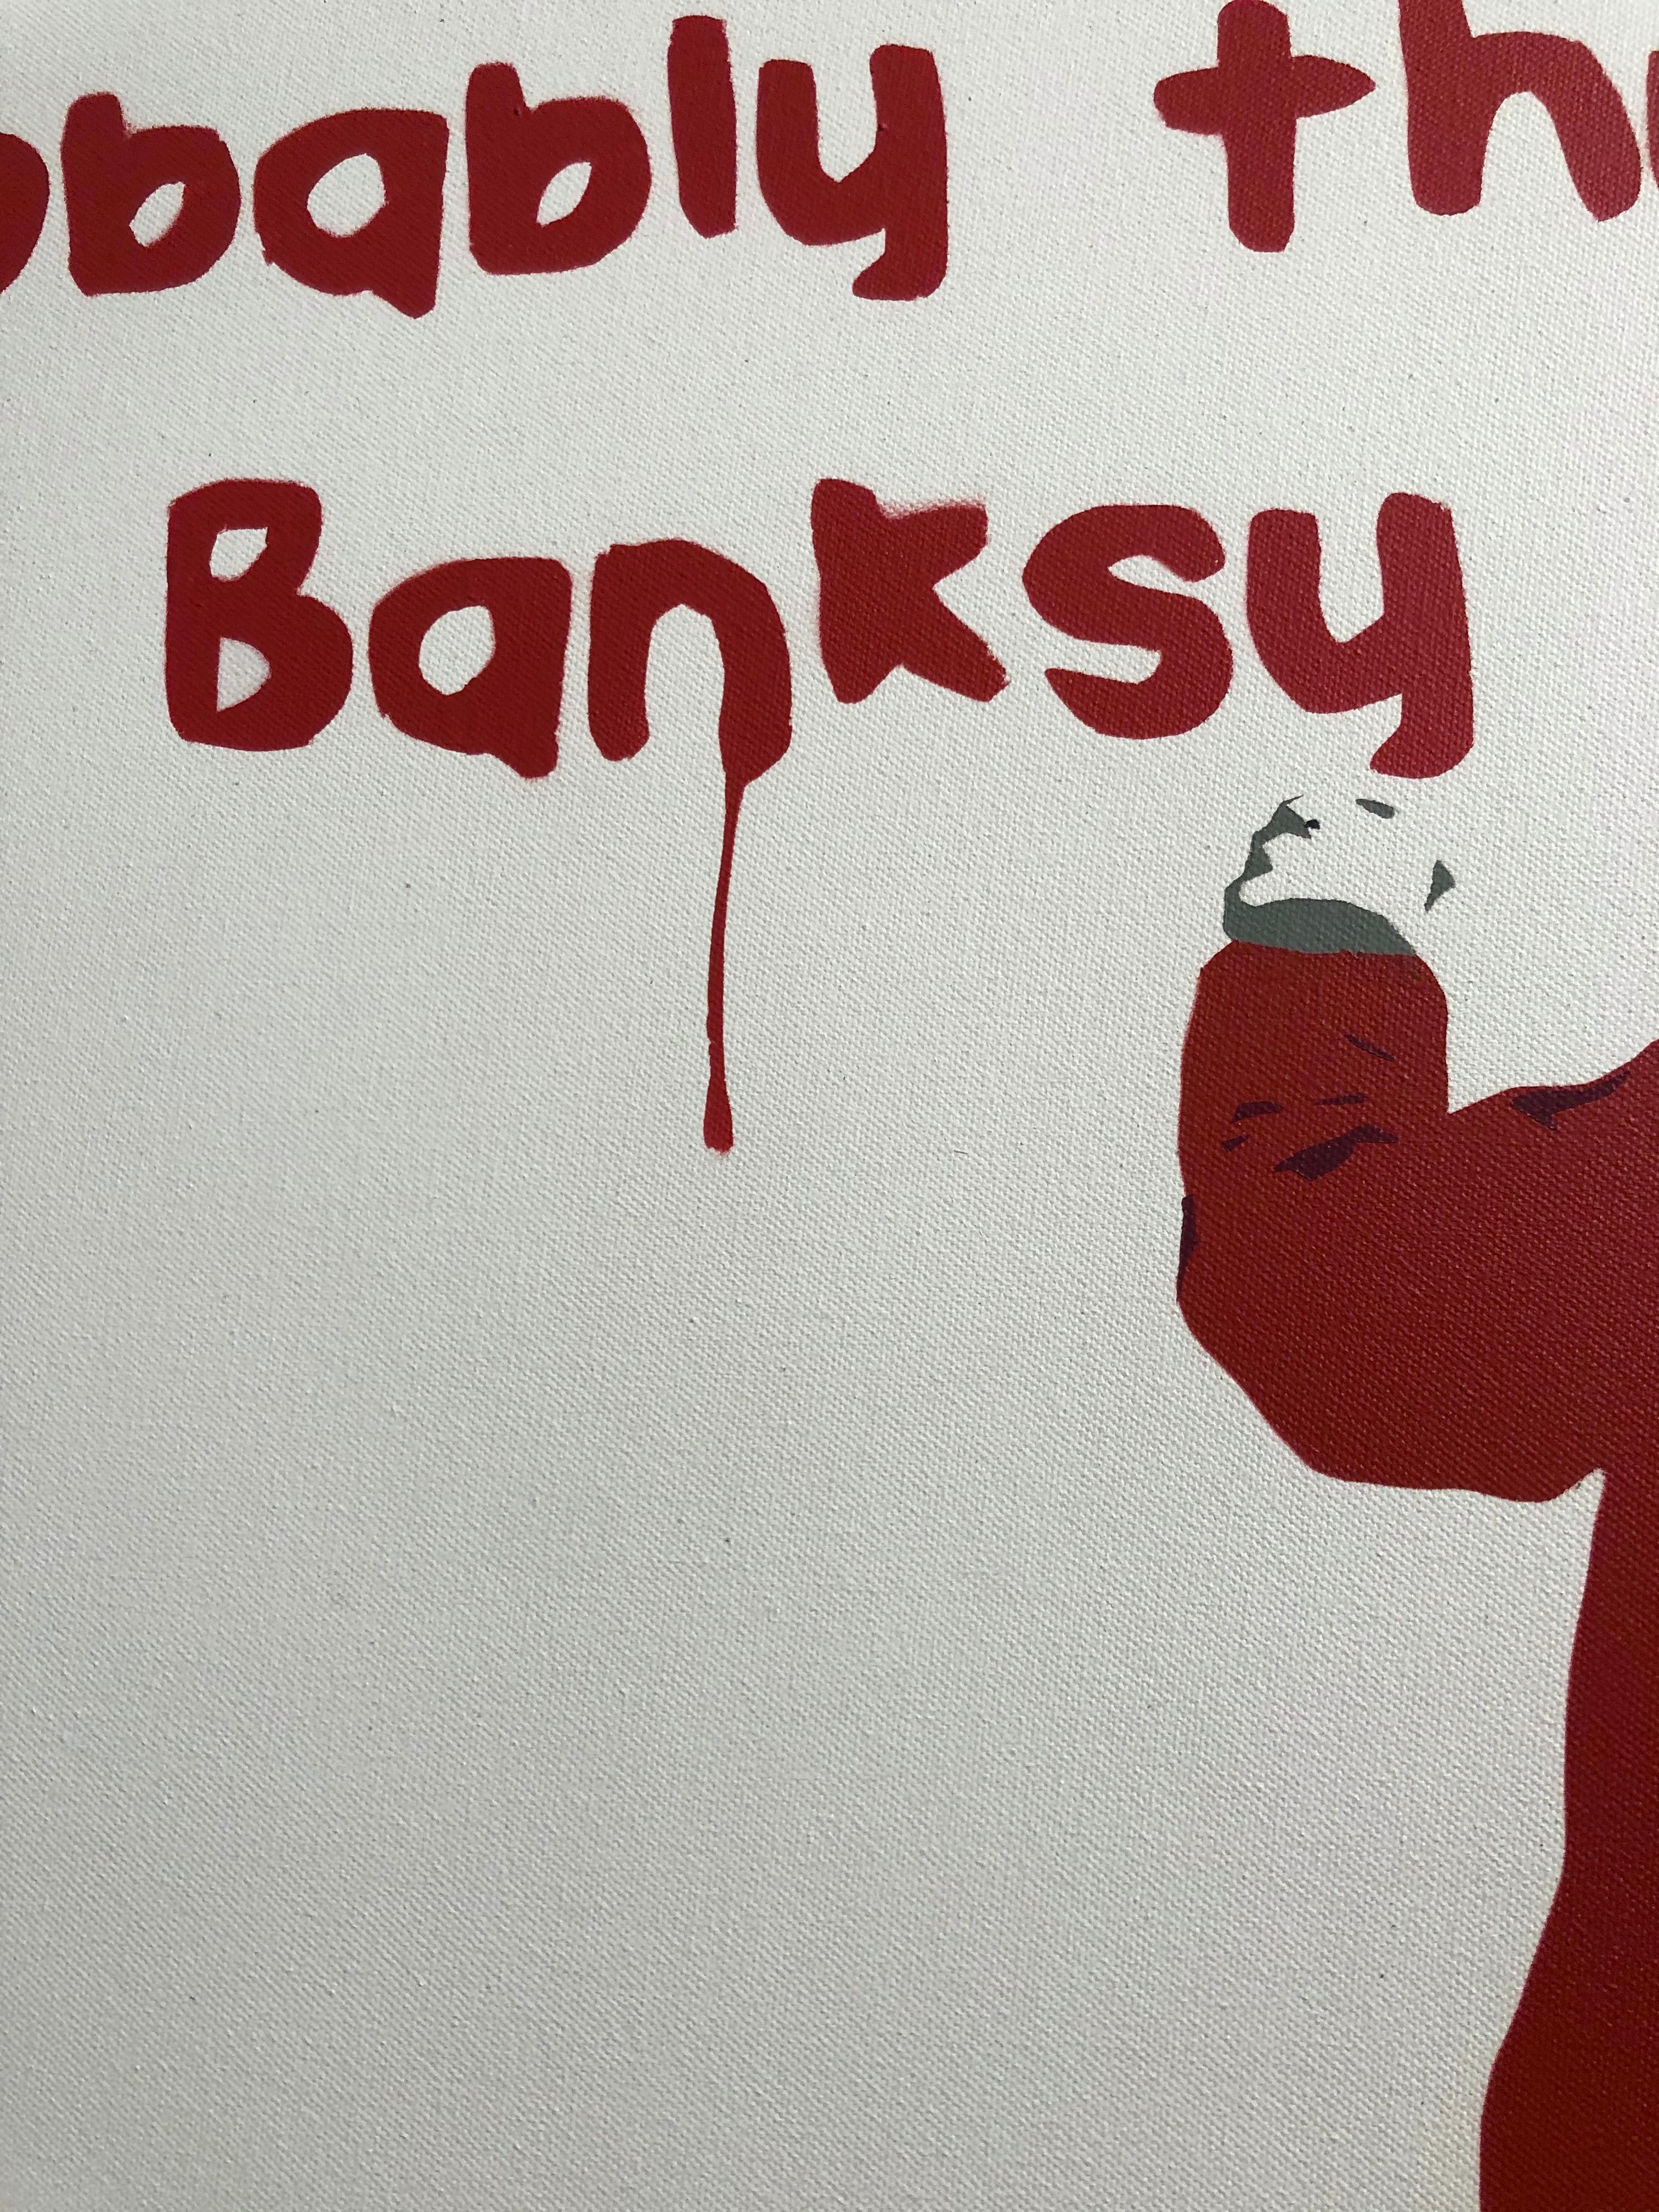 banksy art jesus